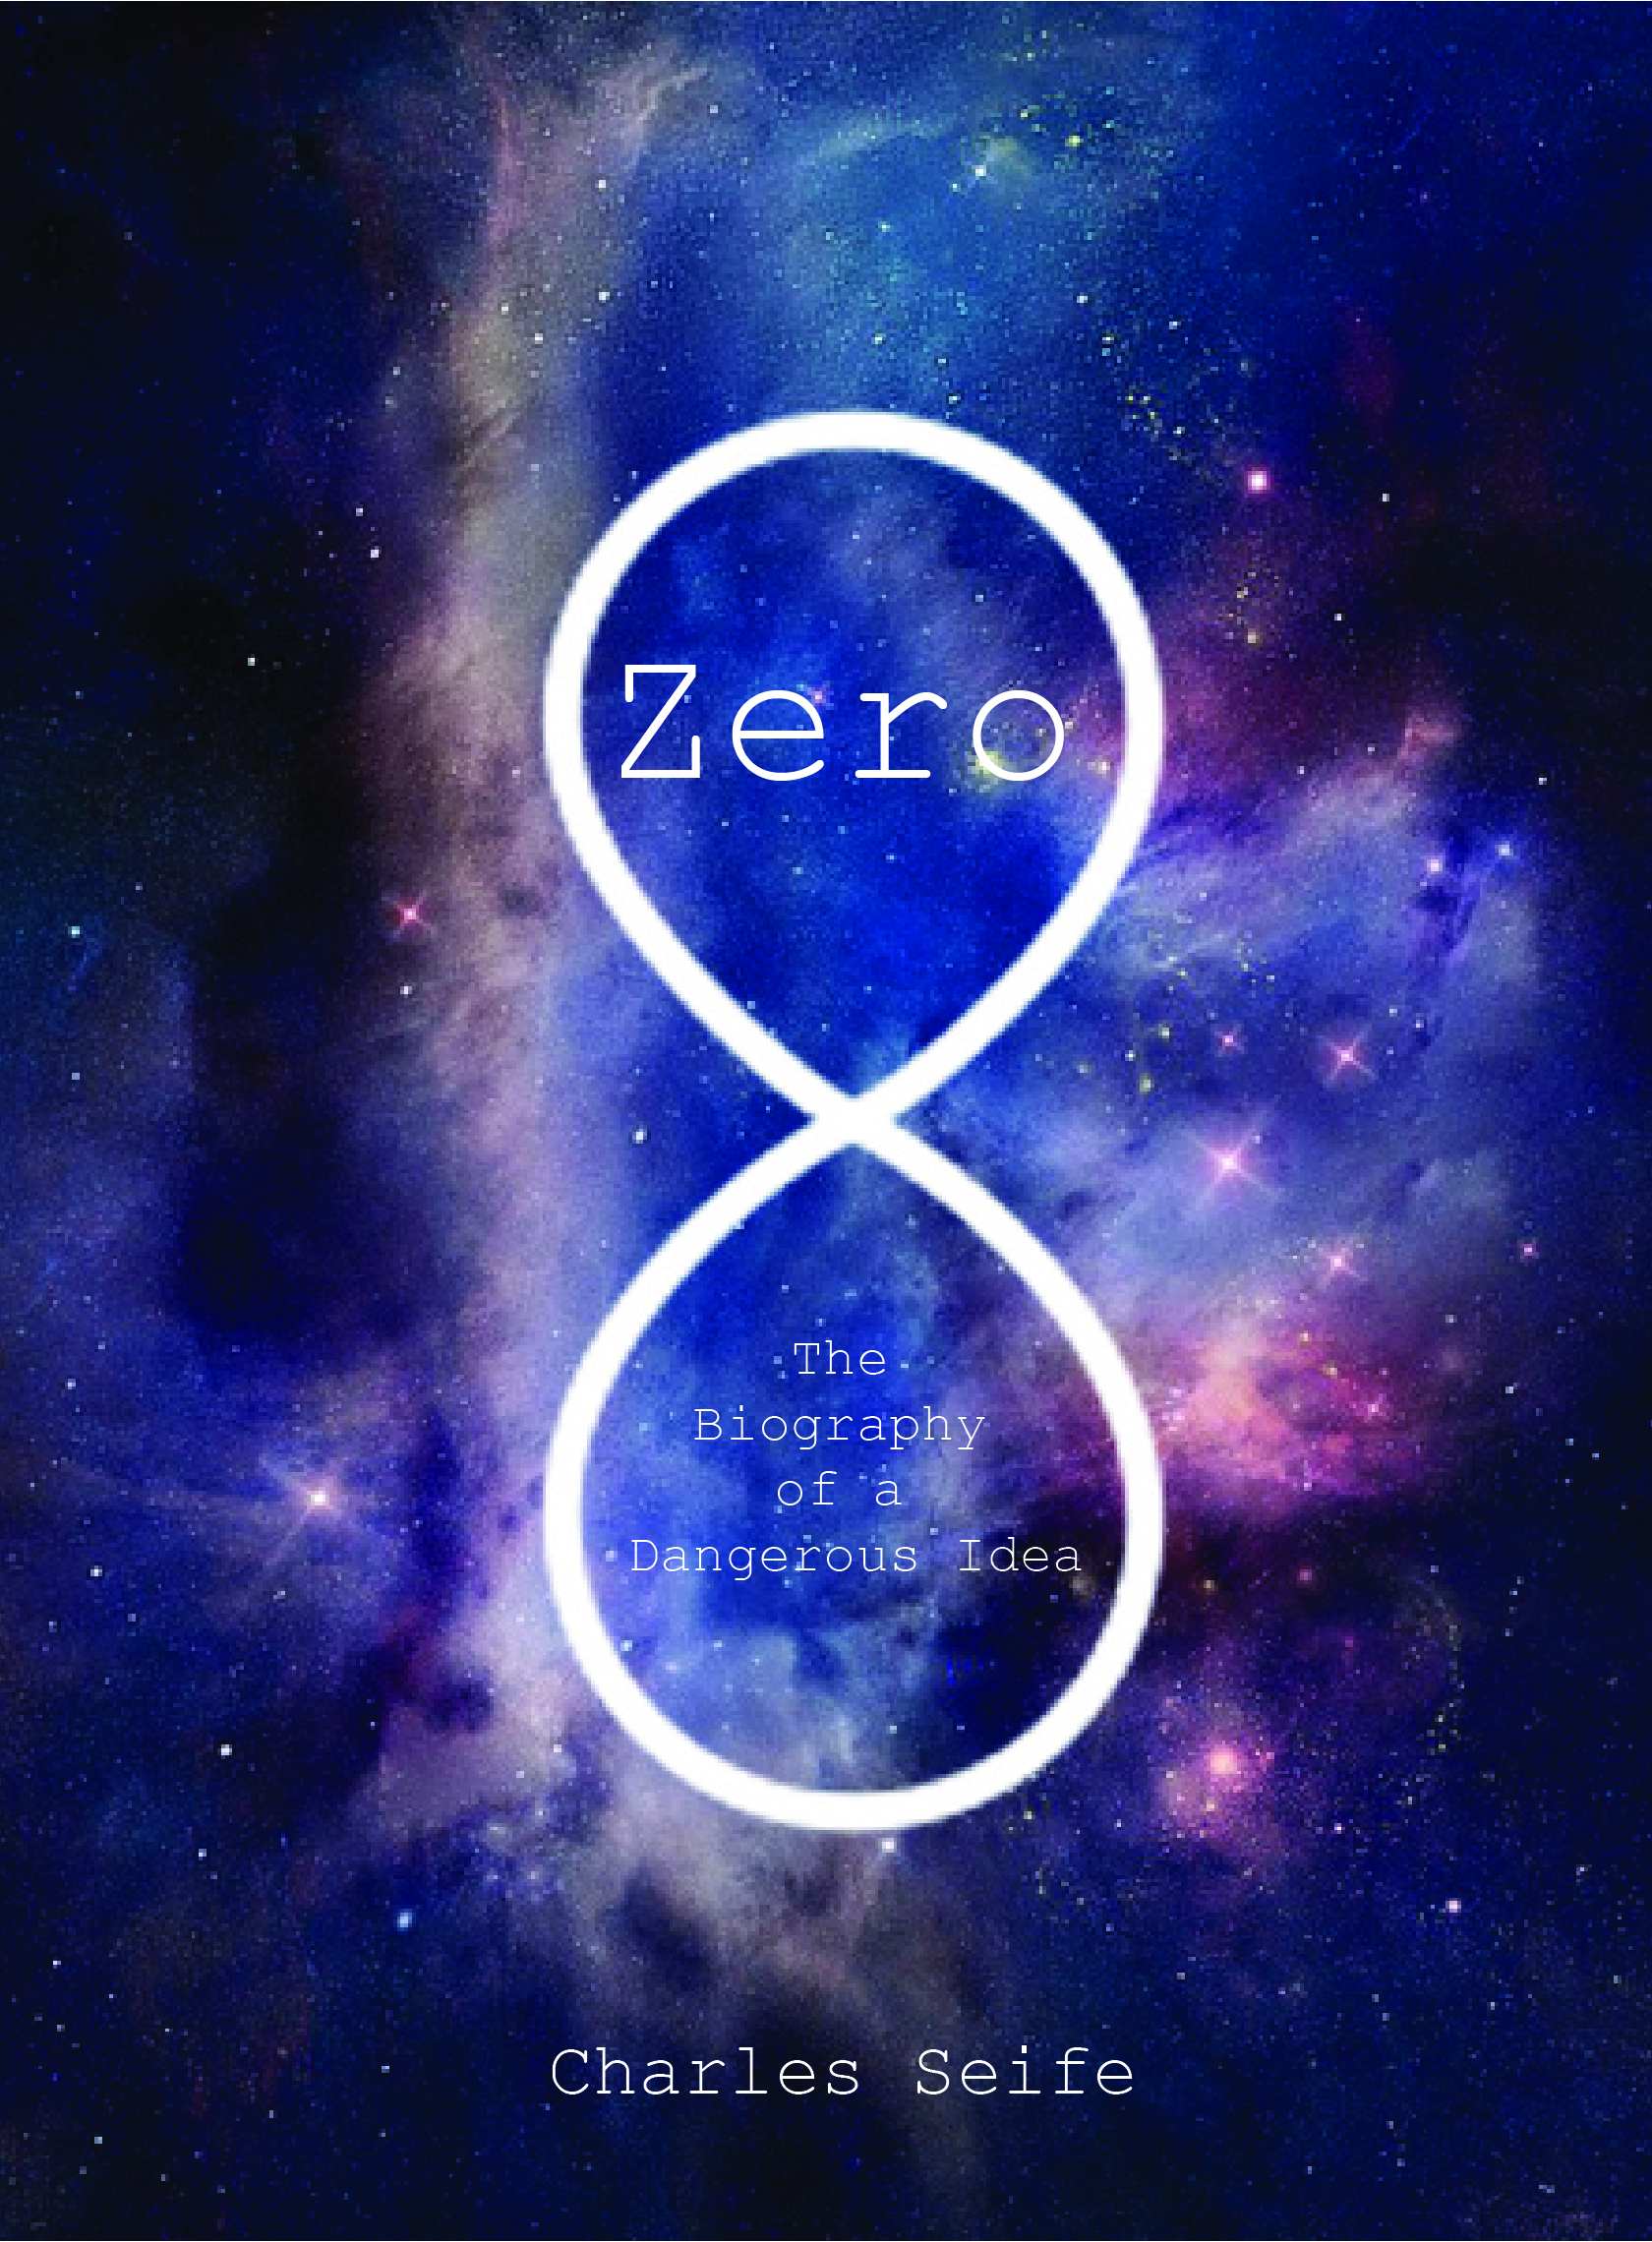 Zero book covers 10-06.jpg